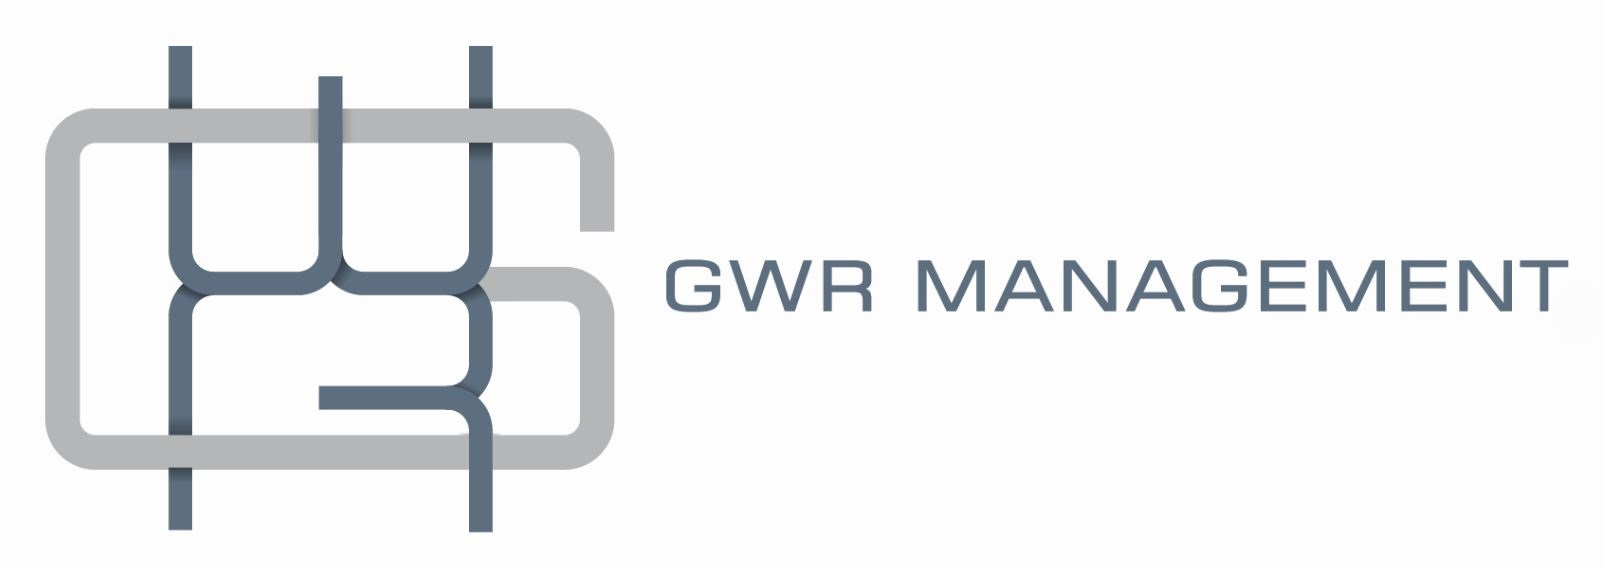 GWR Managements